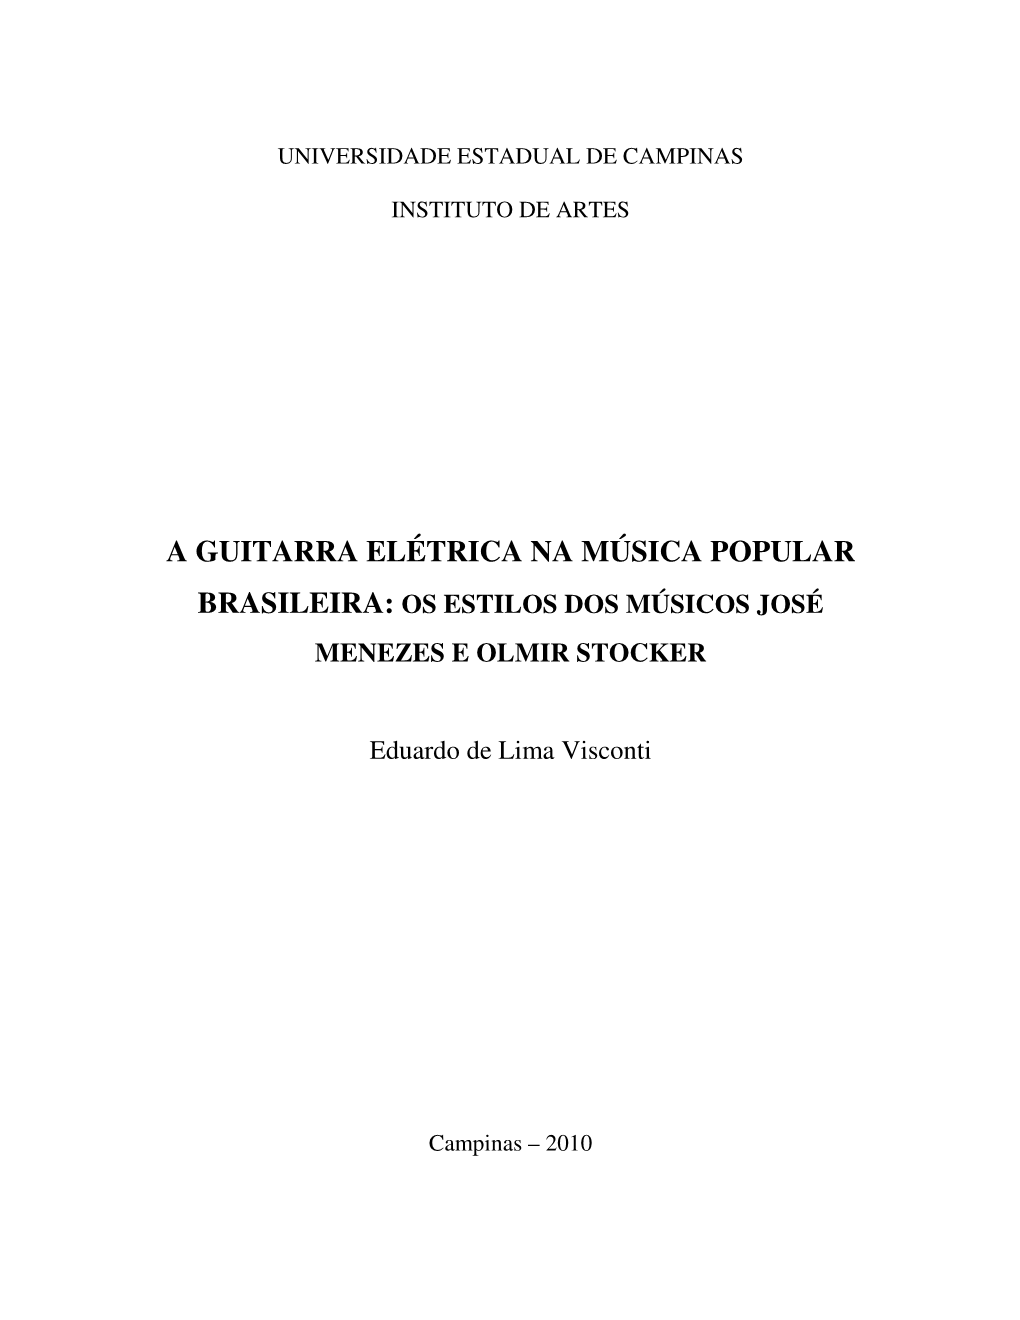 A Guitarra Elétrica Na Música Popular Brasileira: Os Estilos Dos Músicos José Menezes E Olmir Stocker